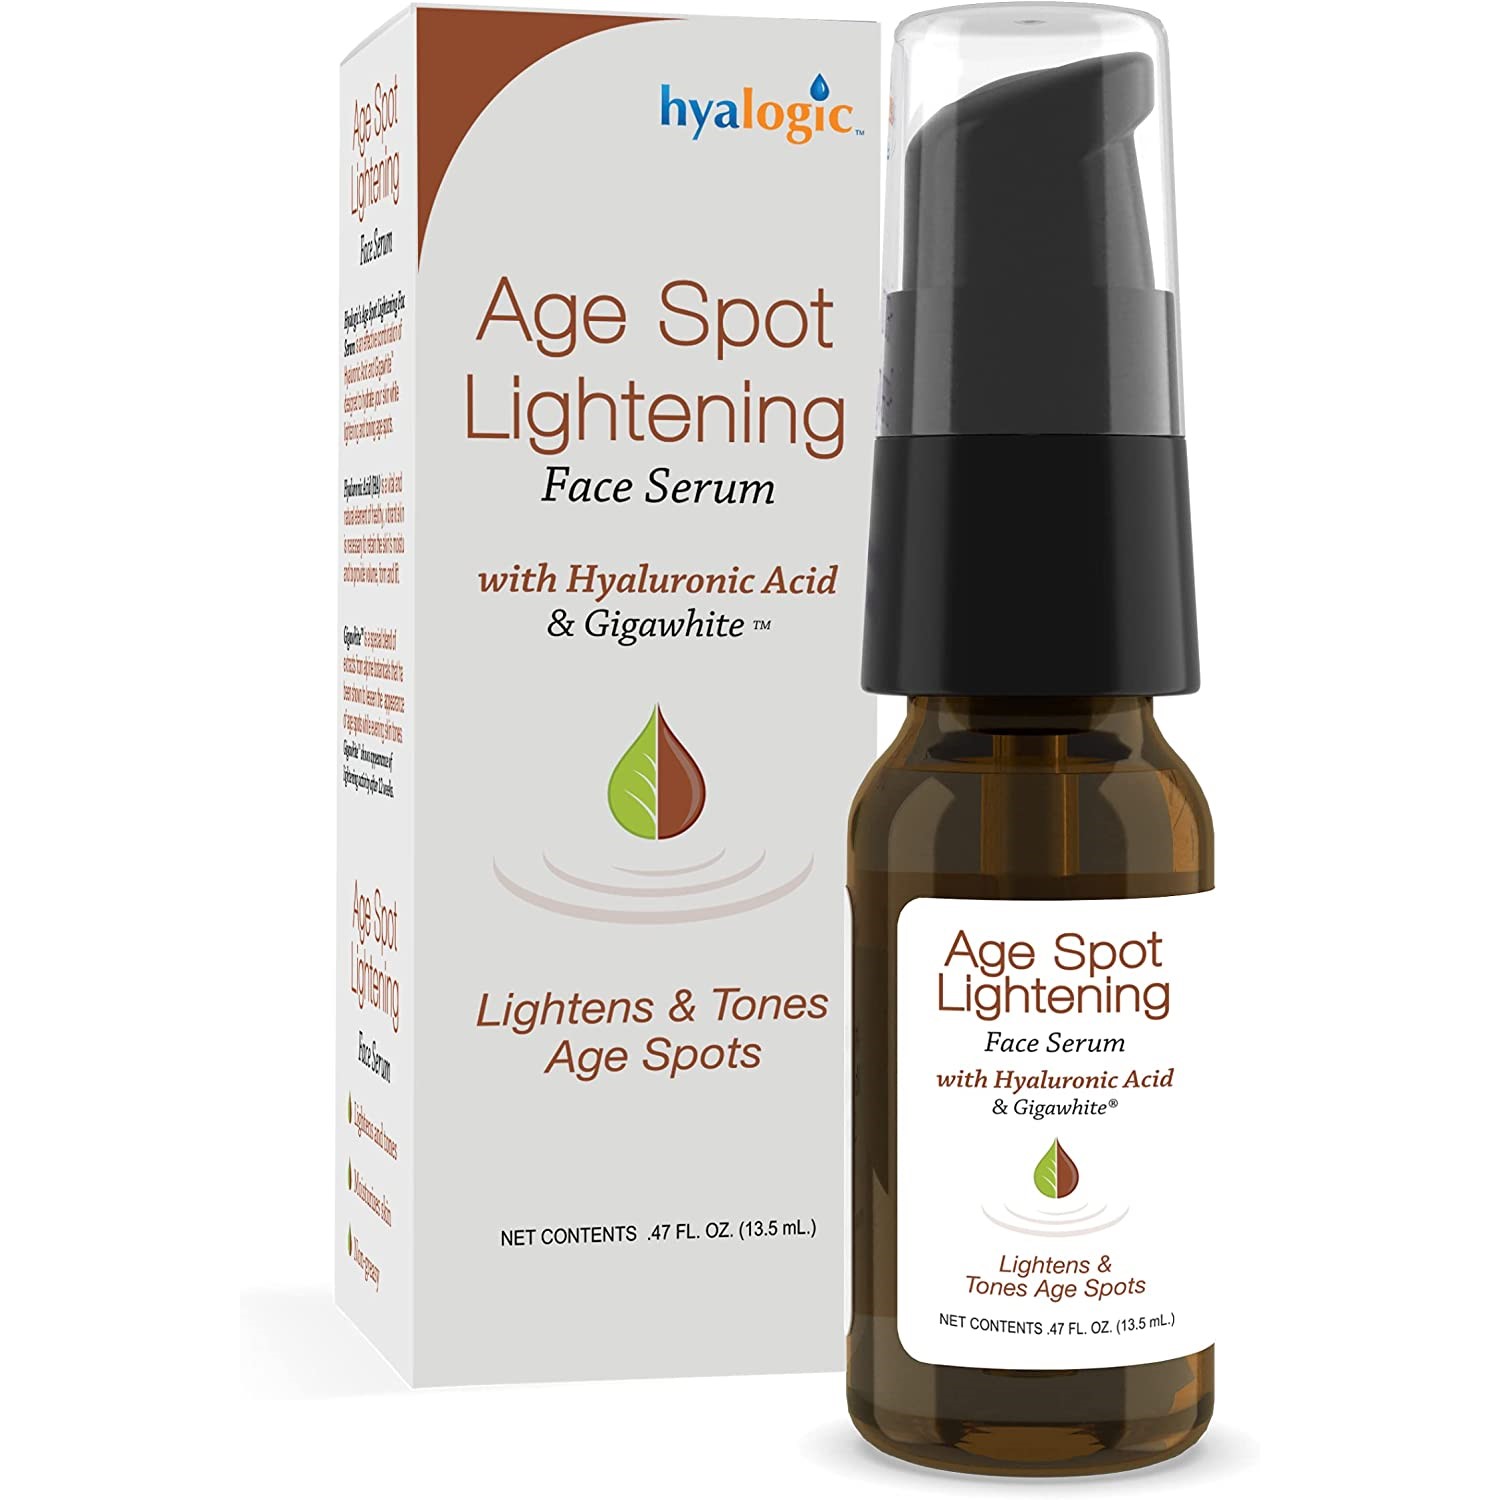 Hyalogic Age Spot Lightening Face Serum With Hyaluronic & Gigawhite (Lightens & Tones Age Spots) | سيروم الزيوت